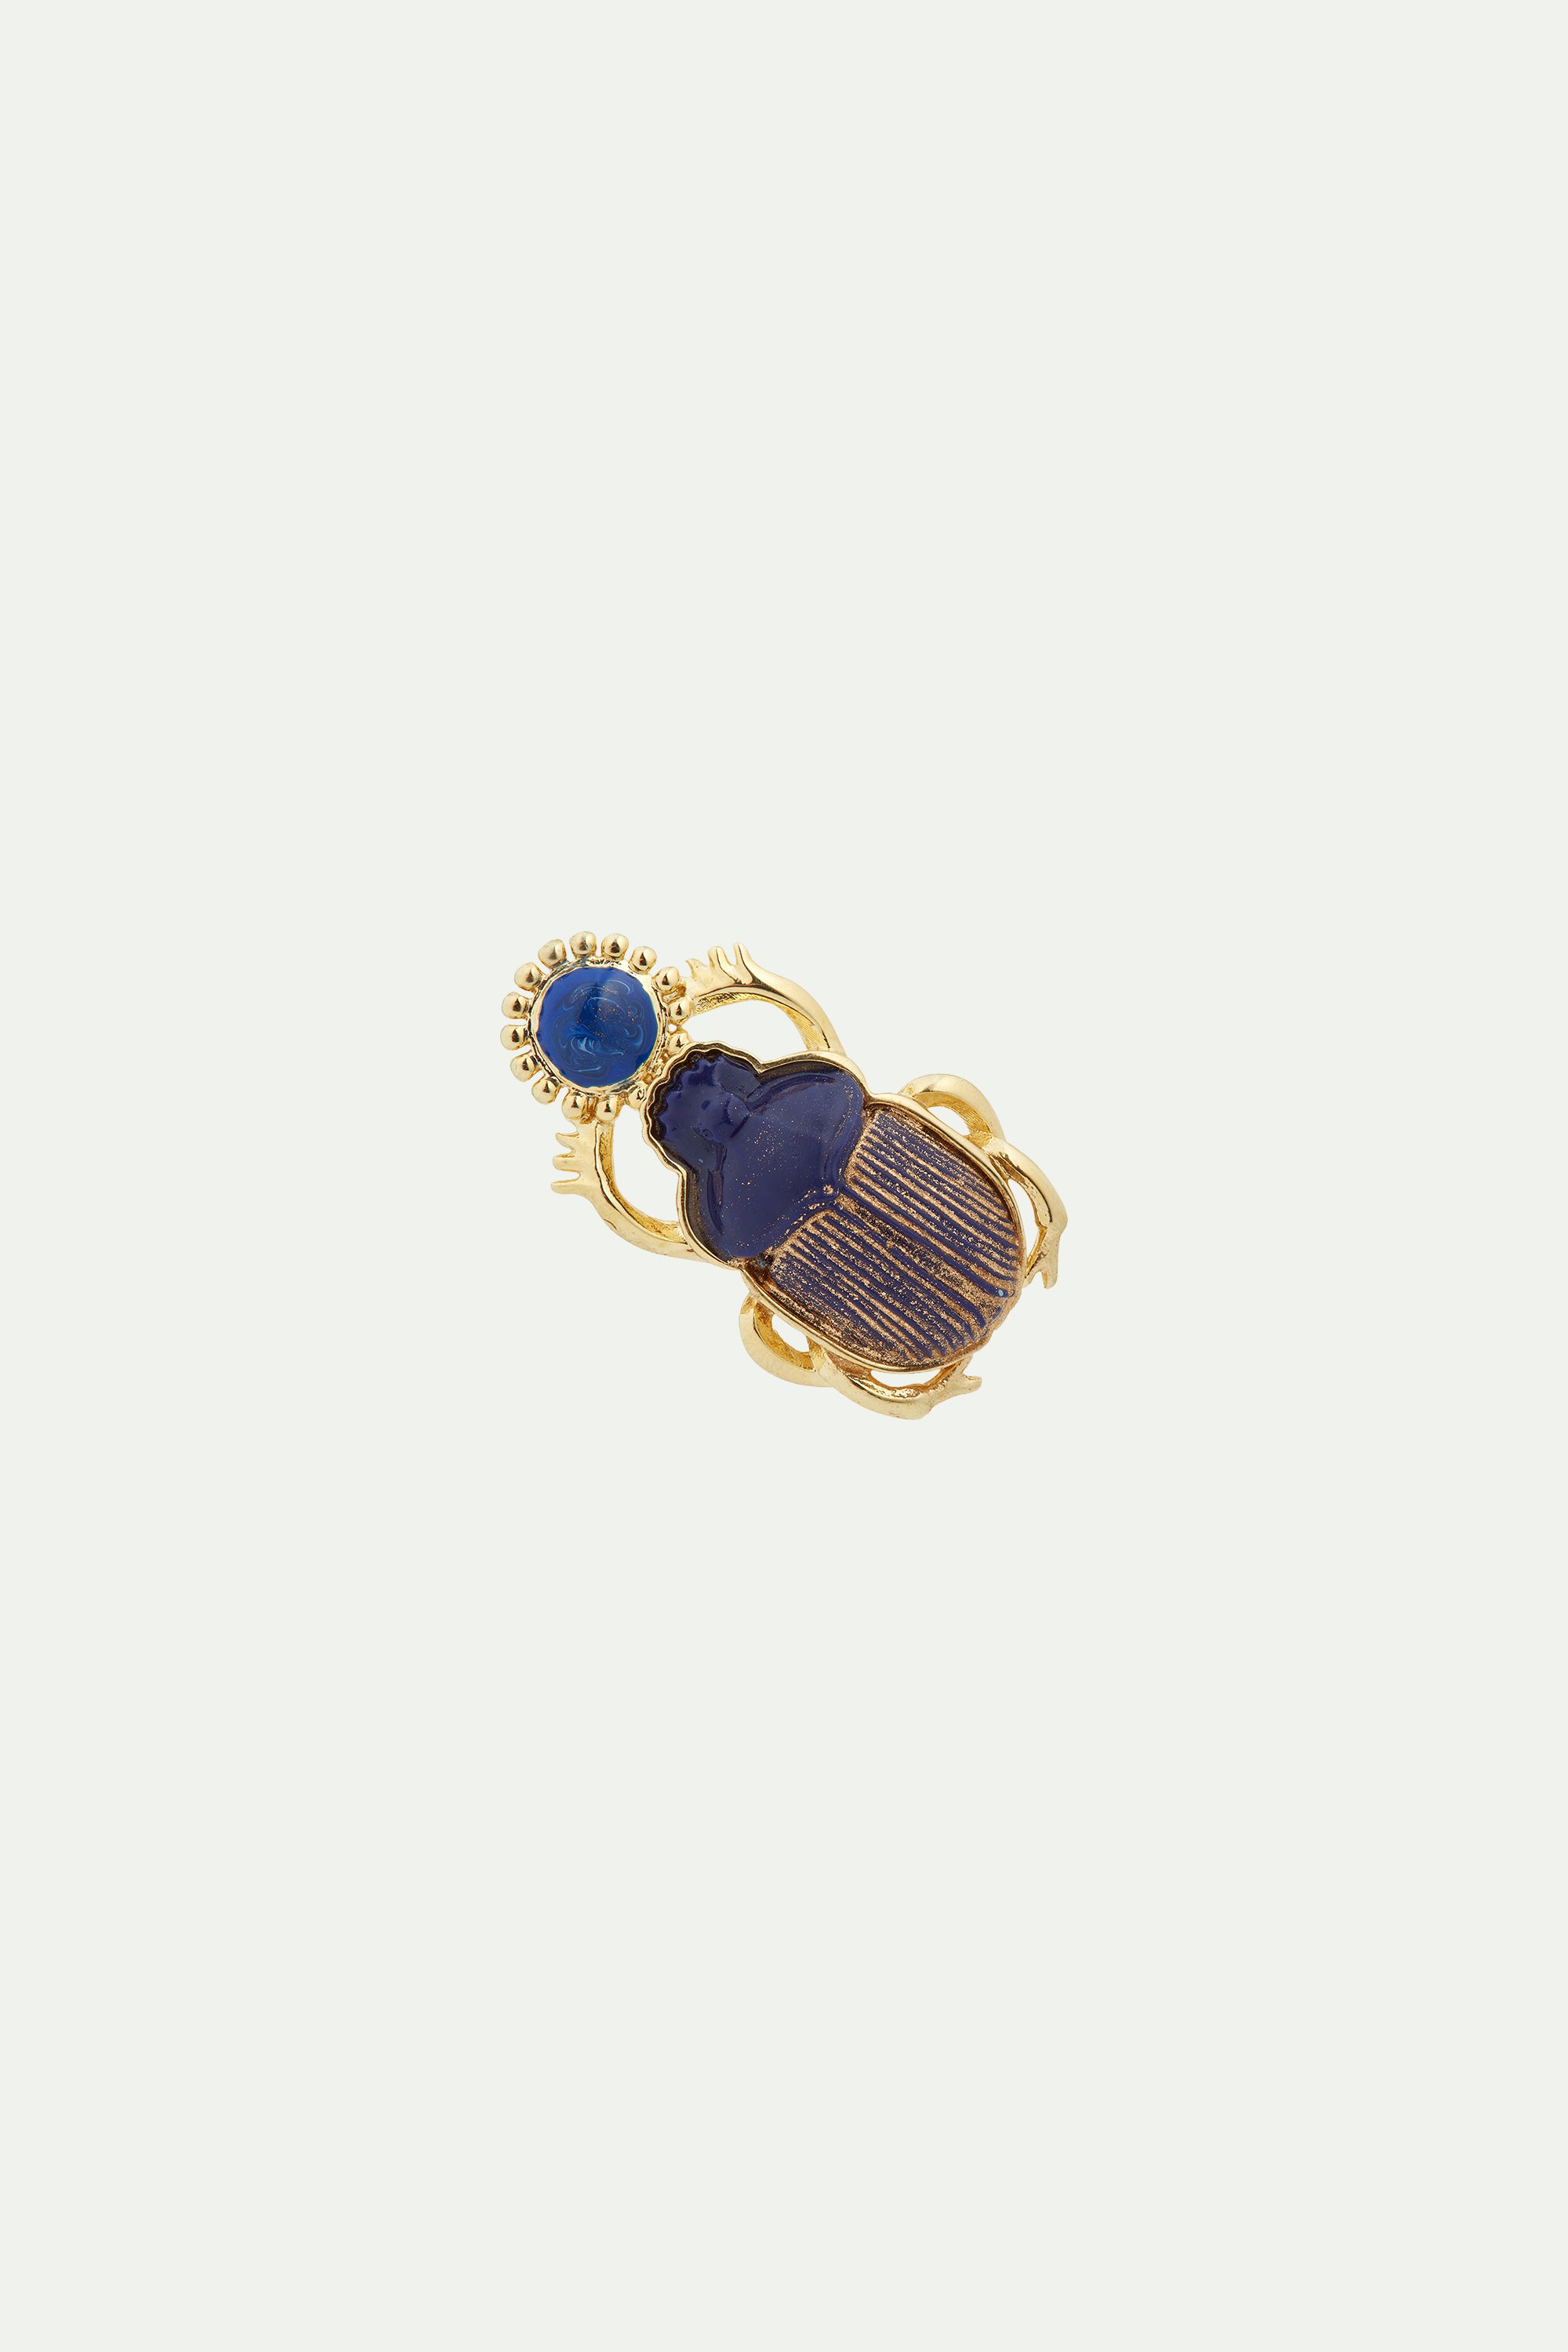 Sacred egyptian blue scarab beetle brooch